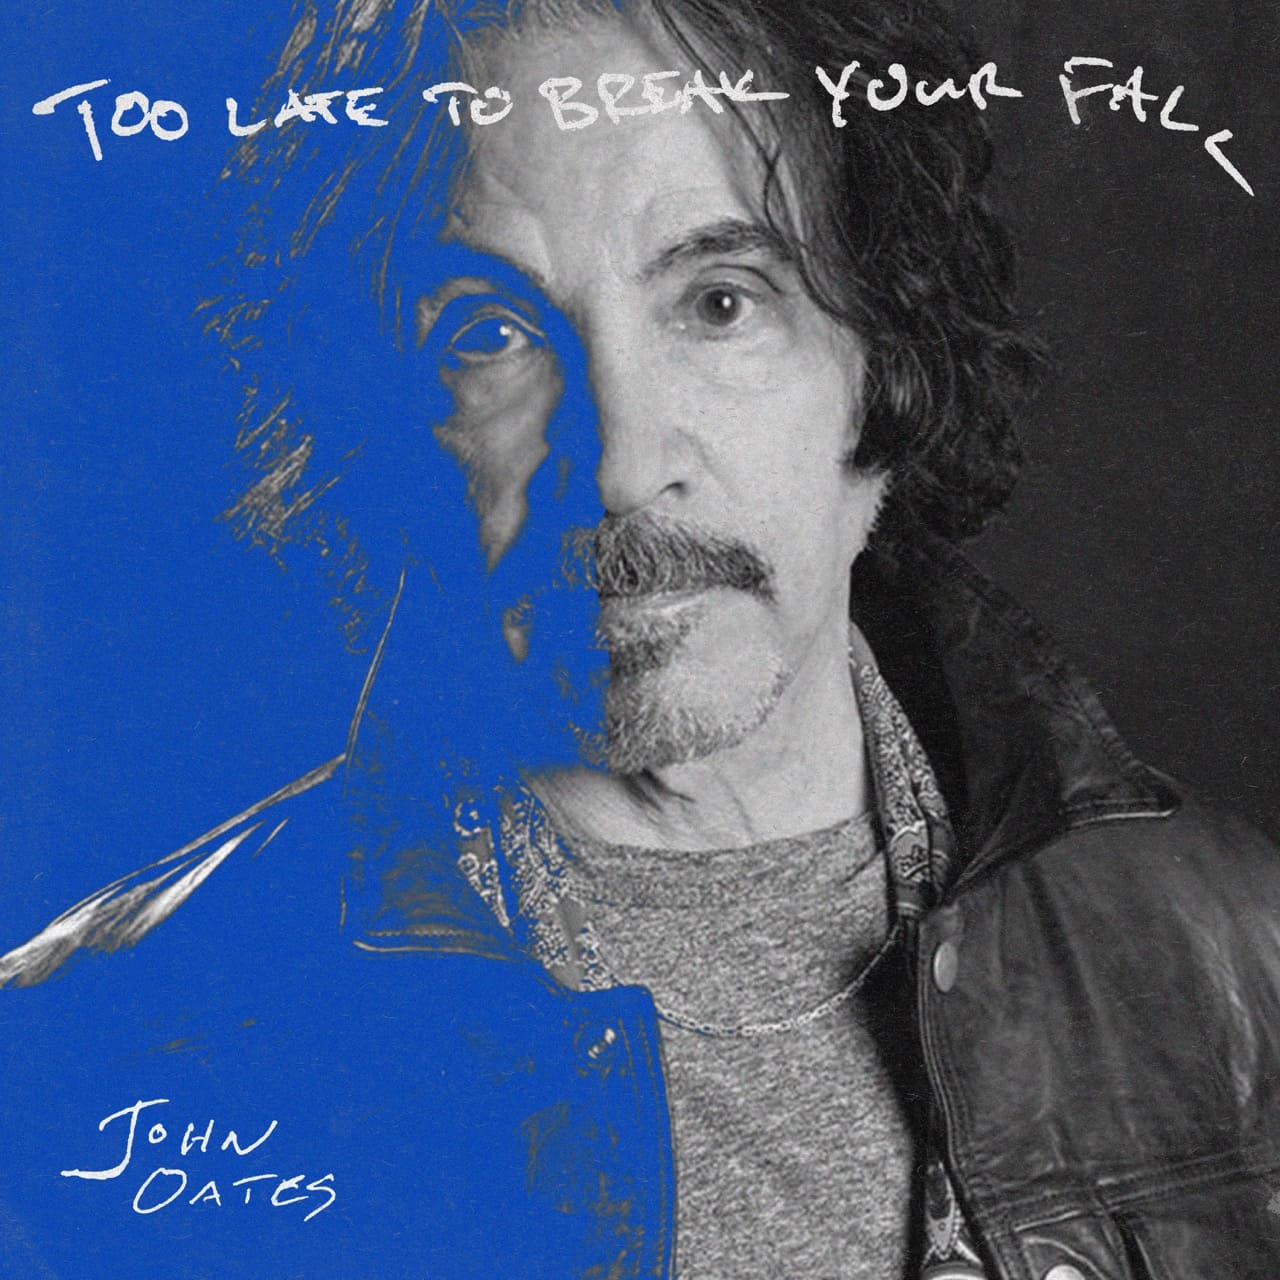 John Oates - Too Late To Break Your Fall (Single)